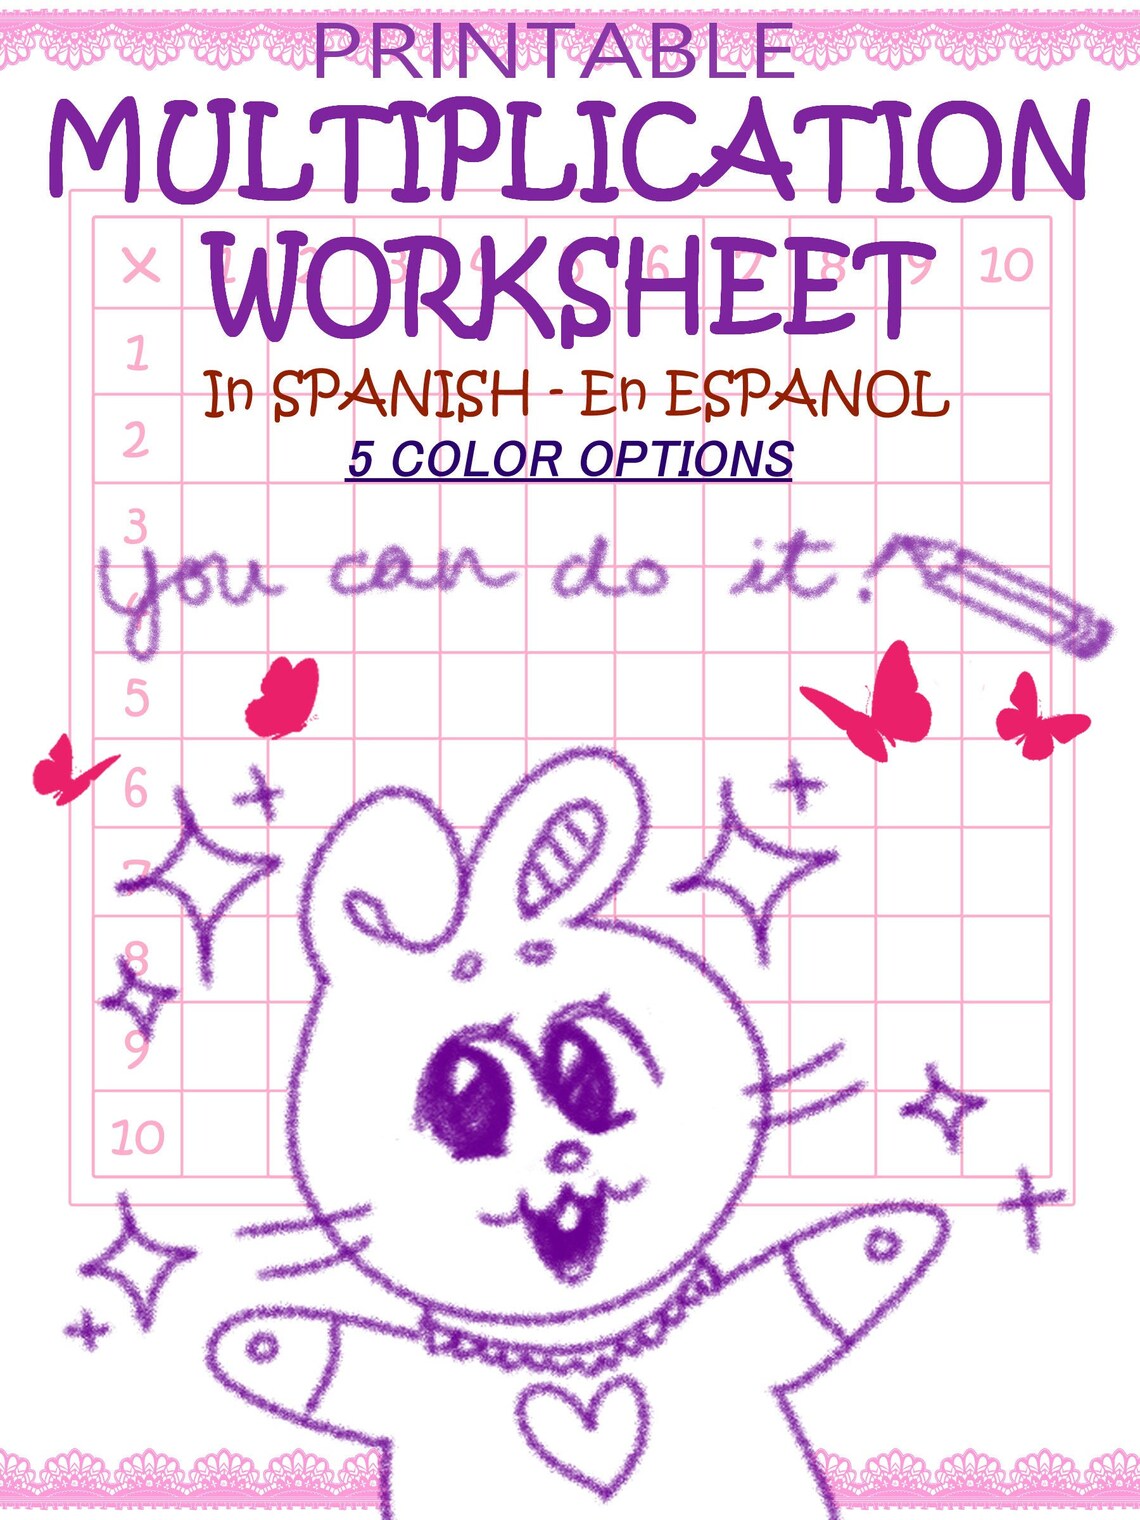 printable-multiplication-worksheet-spanish-5-colors-etsy